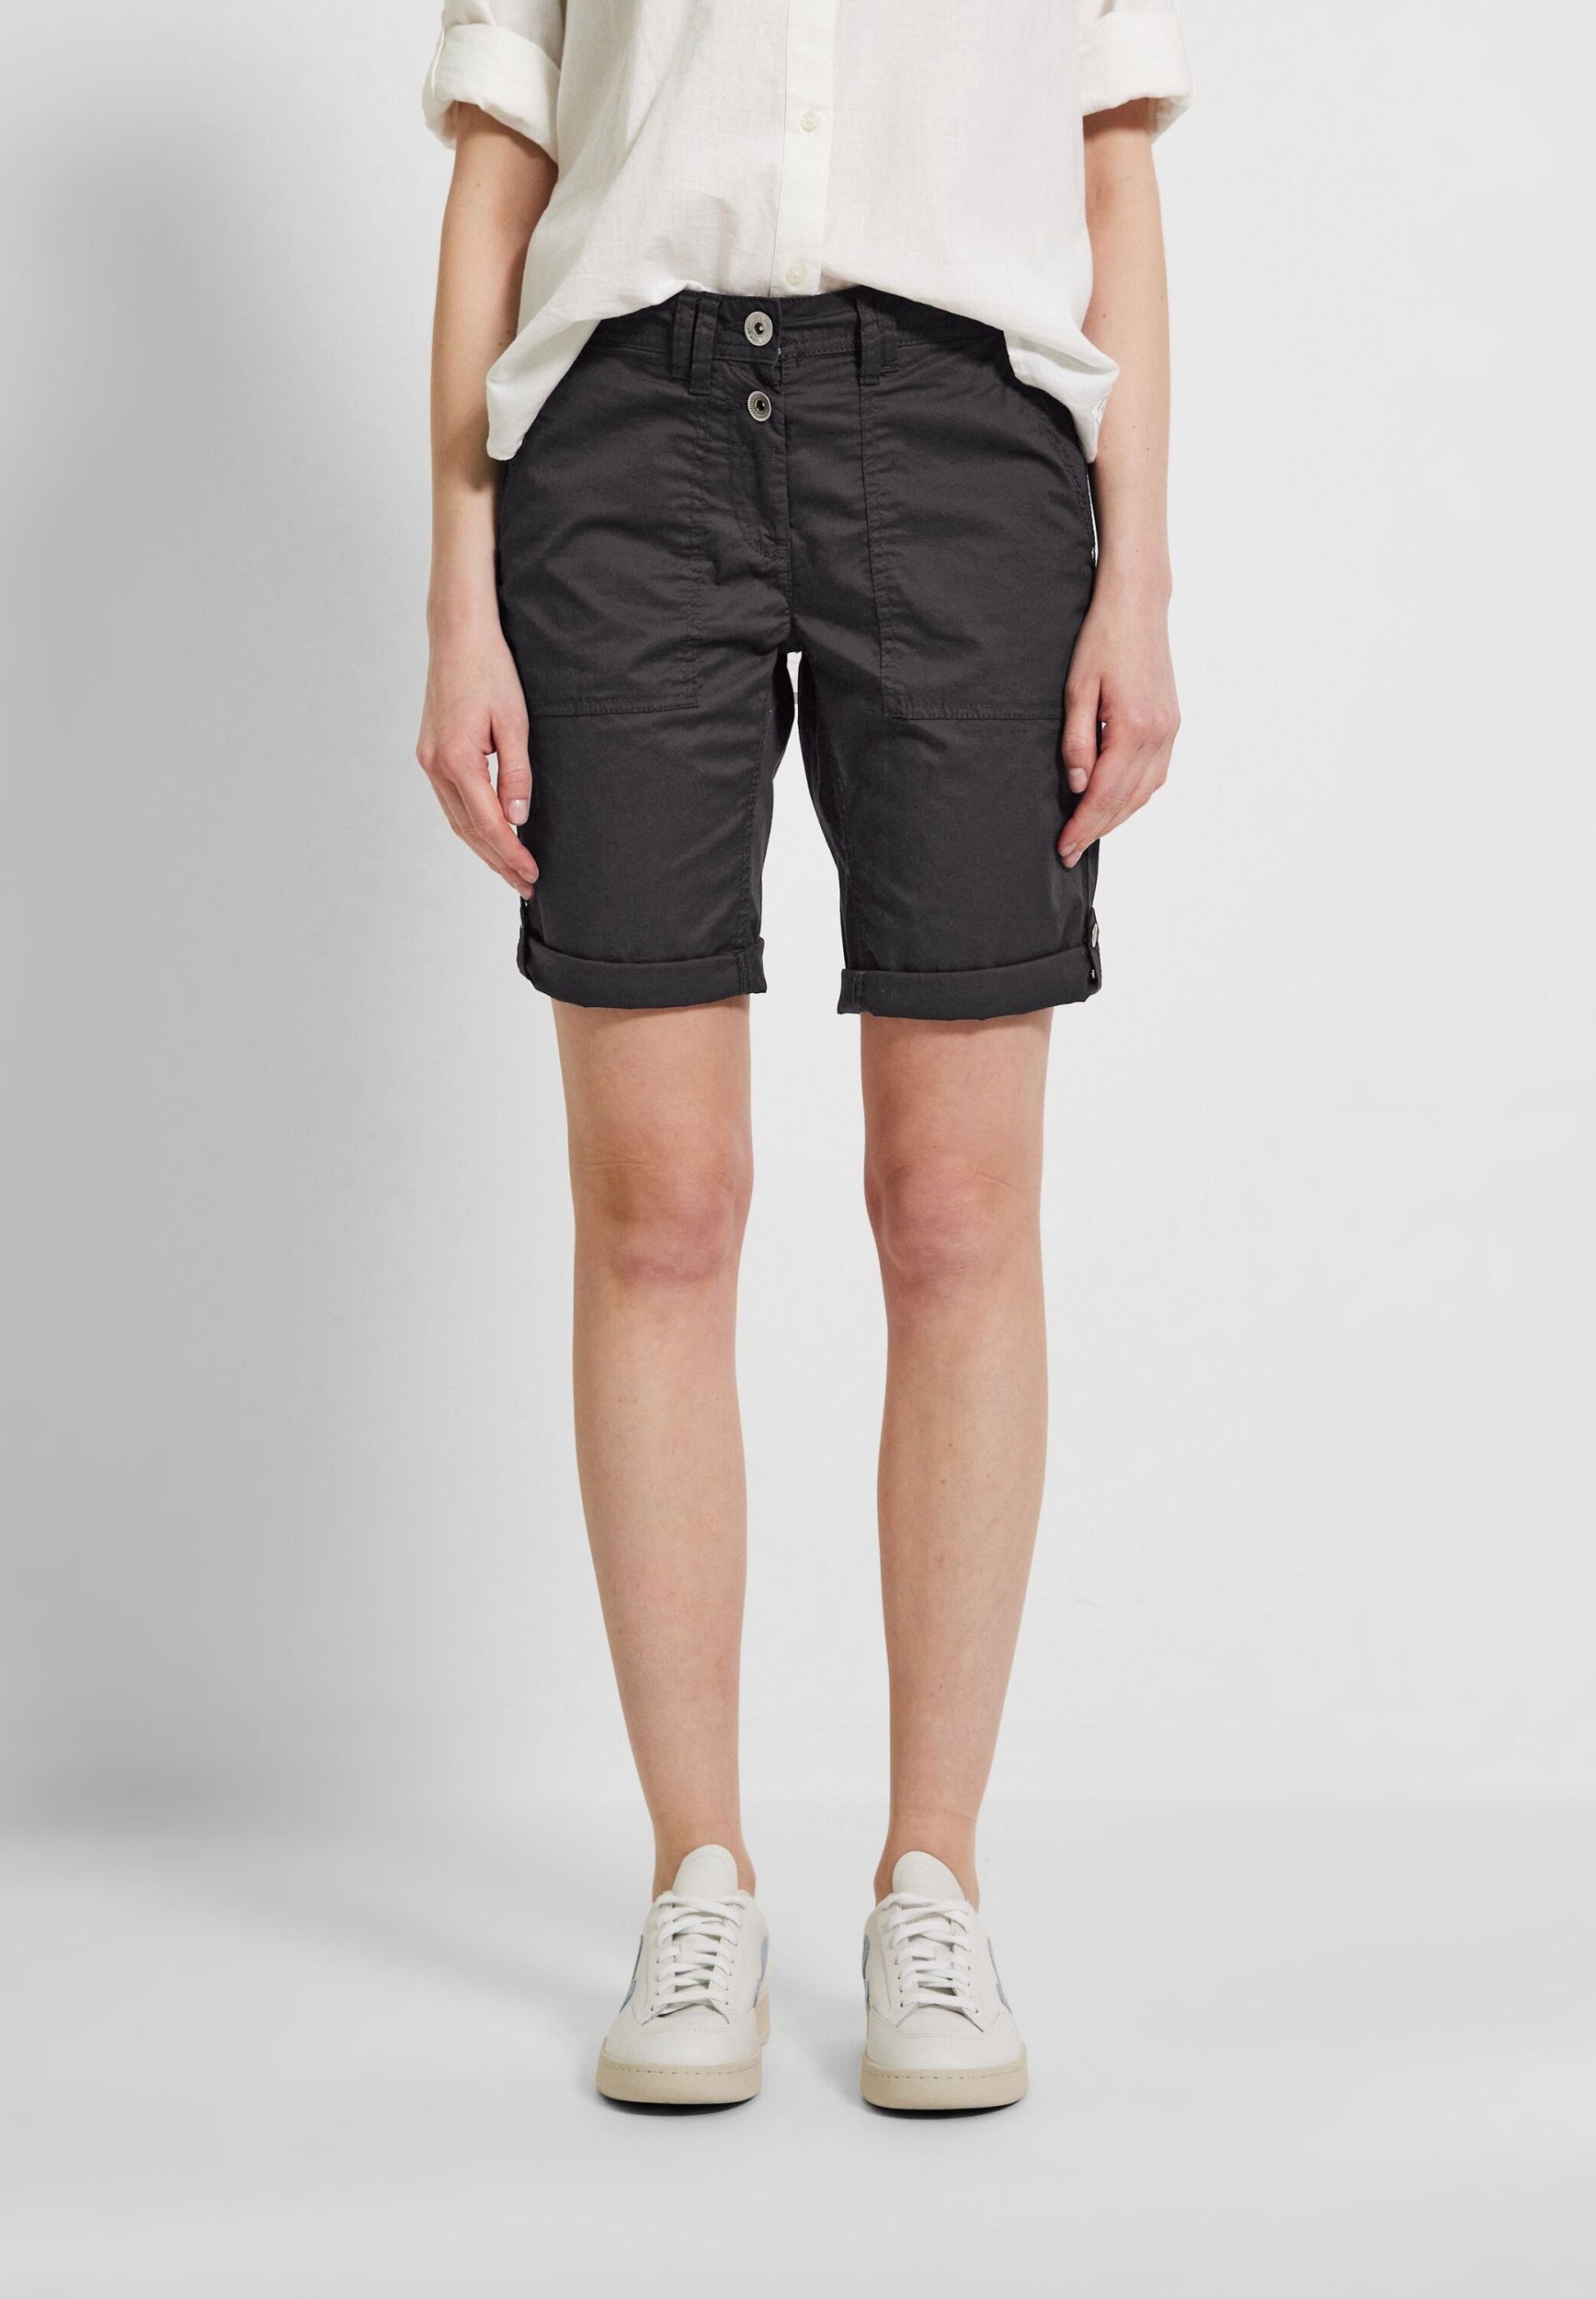 Dehnbund-Hose grey New Shorts NOS carbon Style York Cecil